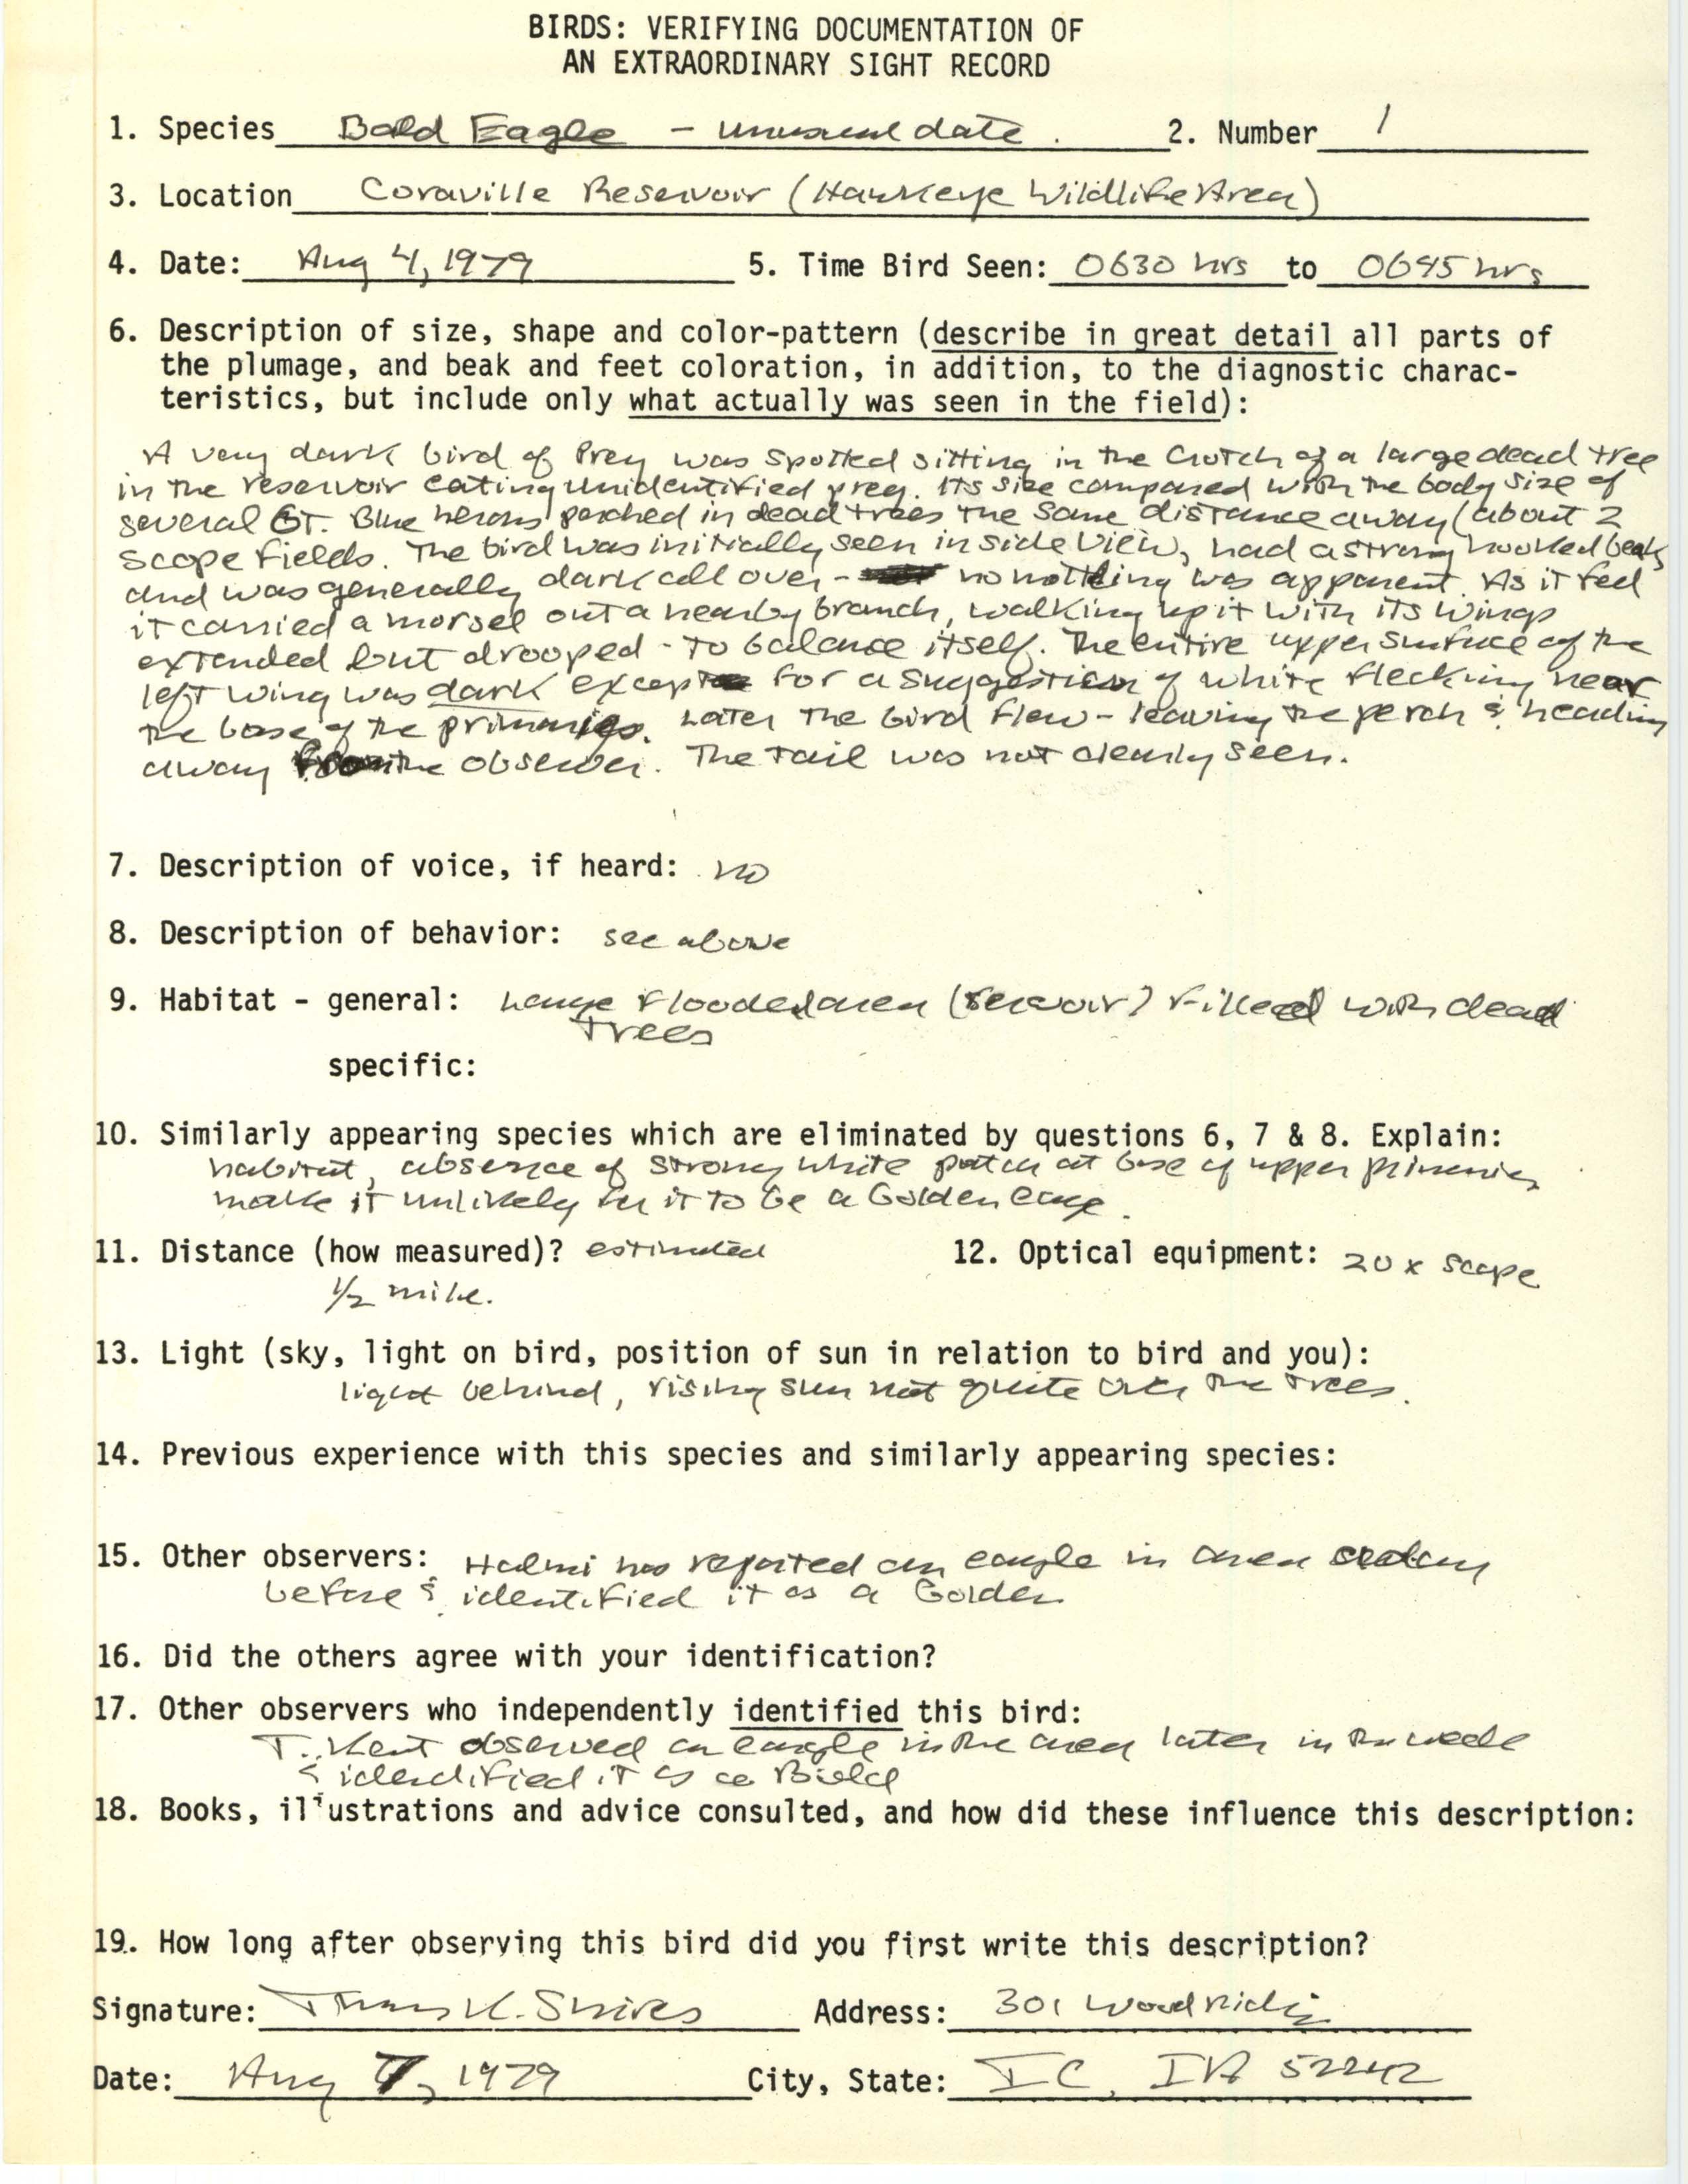 Rare bird documentation form for Bald Eagle at Hawkeye Wildlife Area, 1979